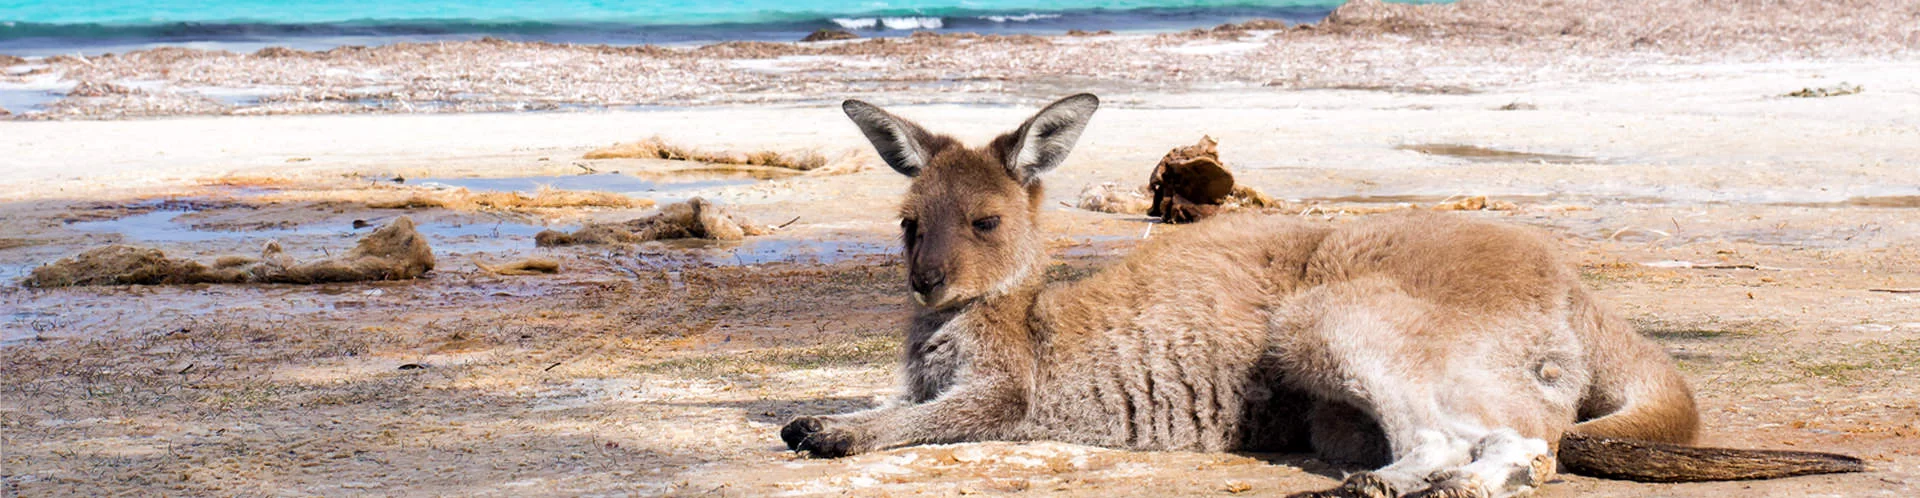 Esperance & the Golden Outback - Western Australia